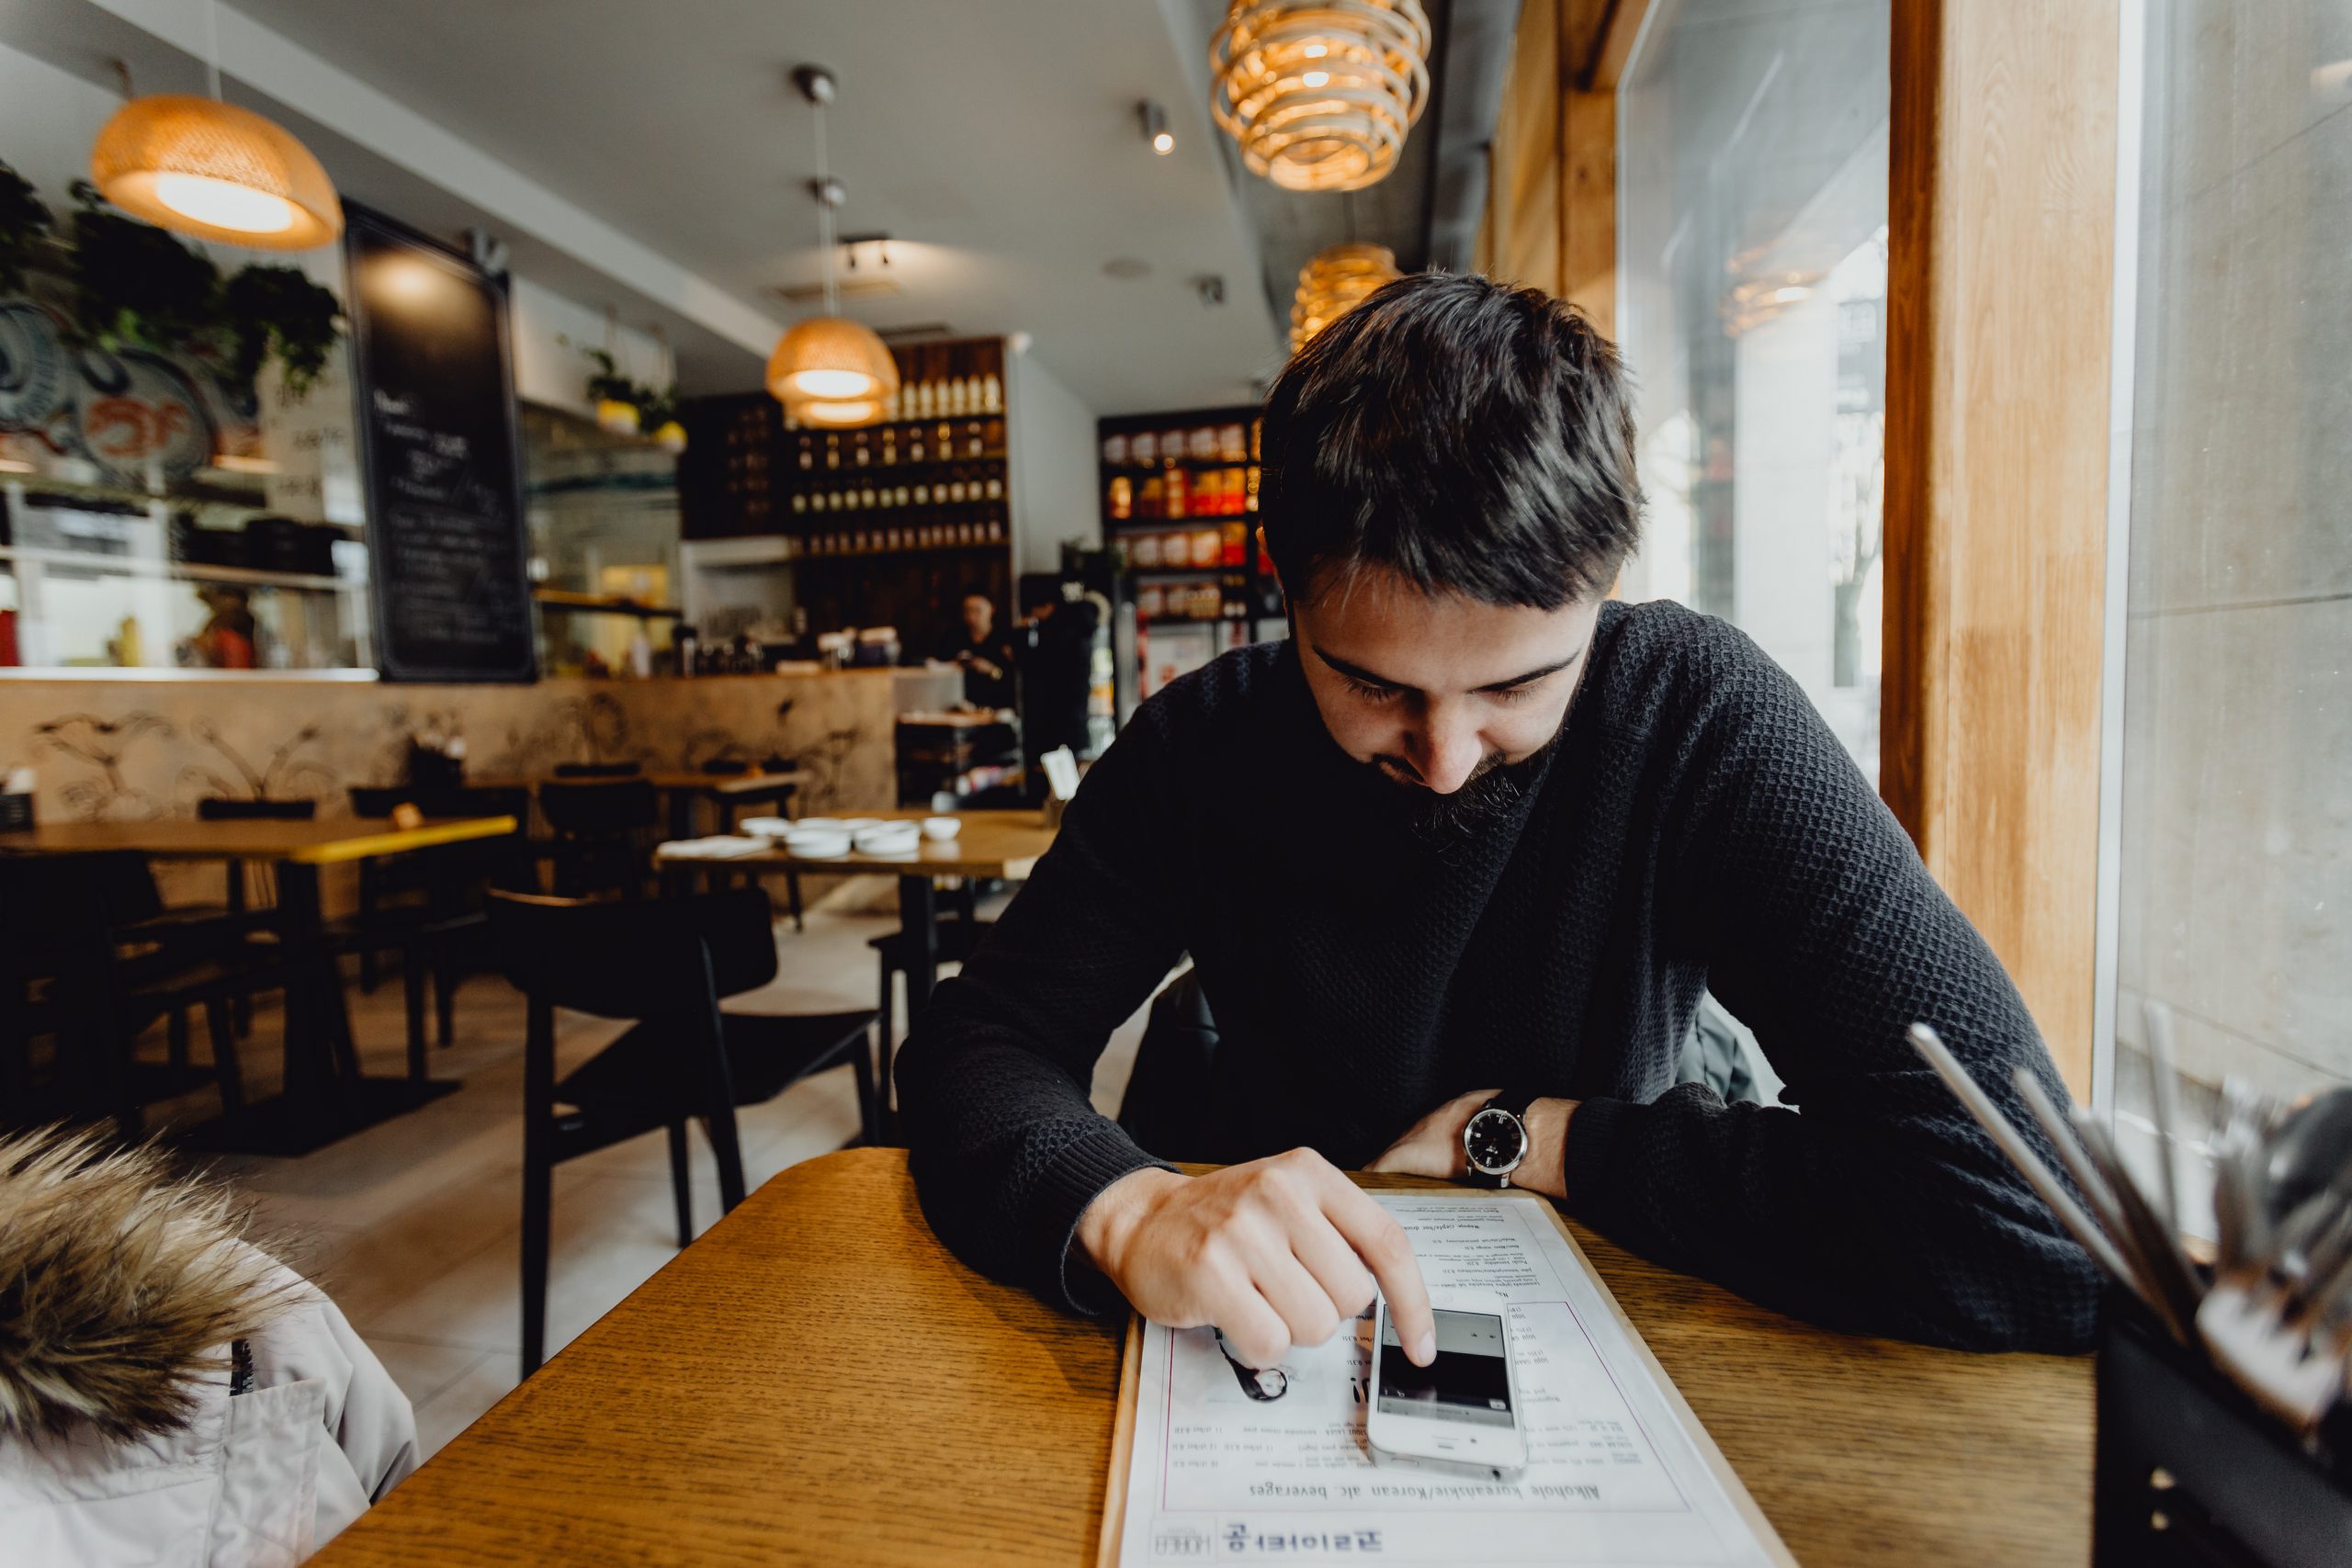 barbat stand la masa in restaurant gol, cu capul plecat, uitandu-se in telefom, imagine reprezentativa pentru restaurantele afectate de coronavirus